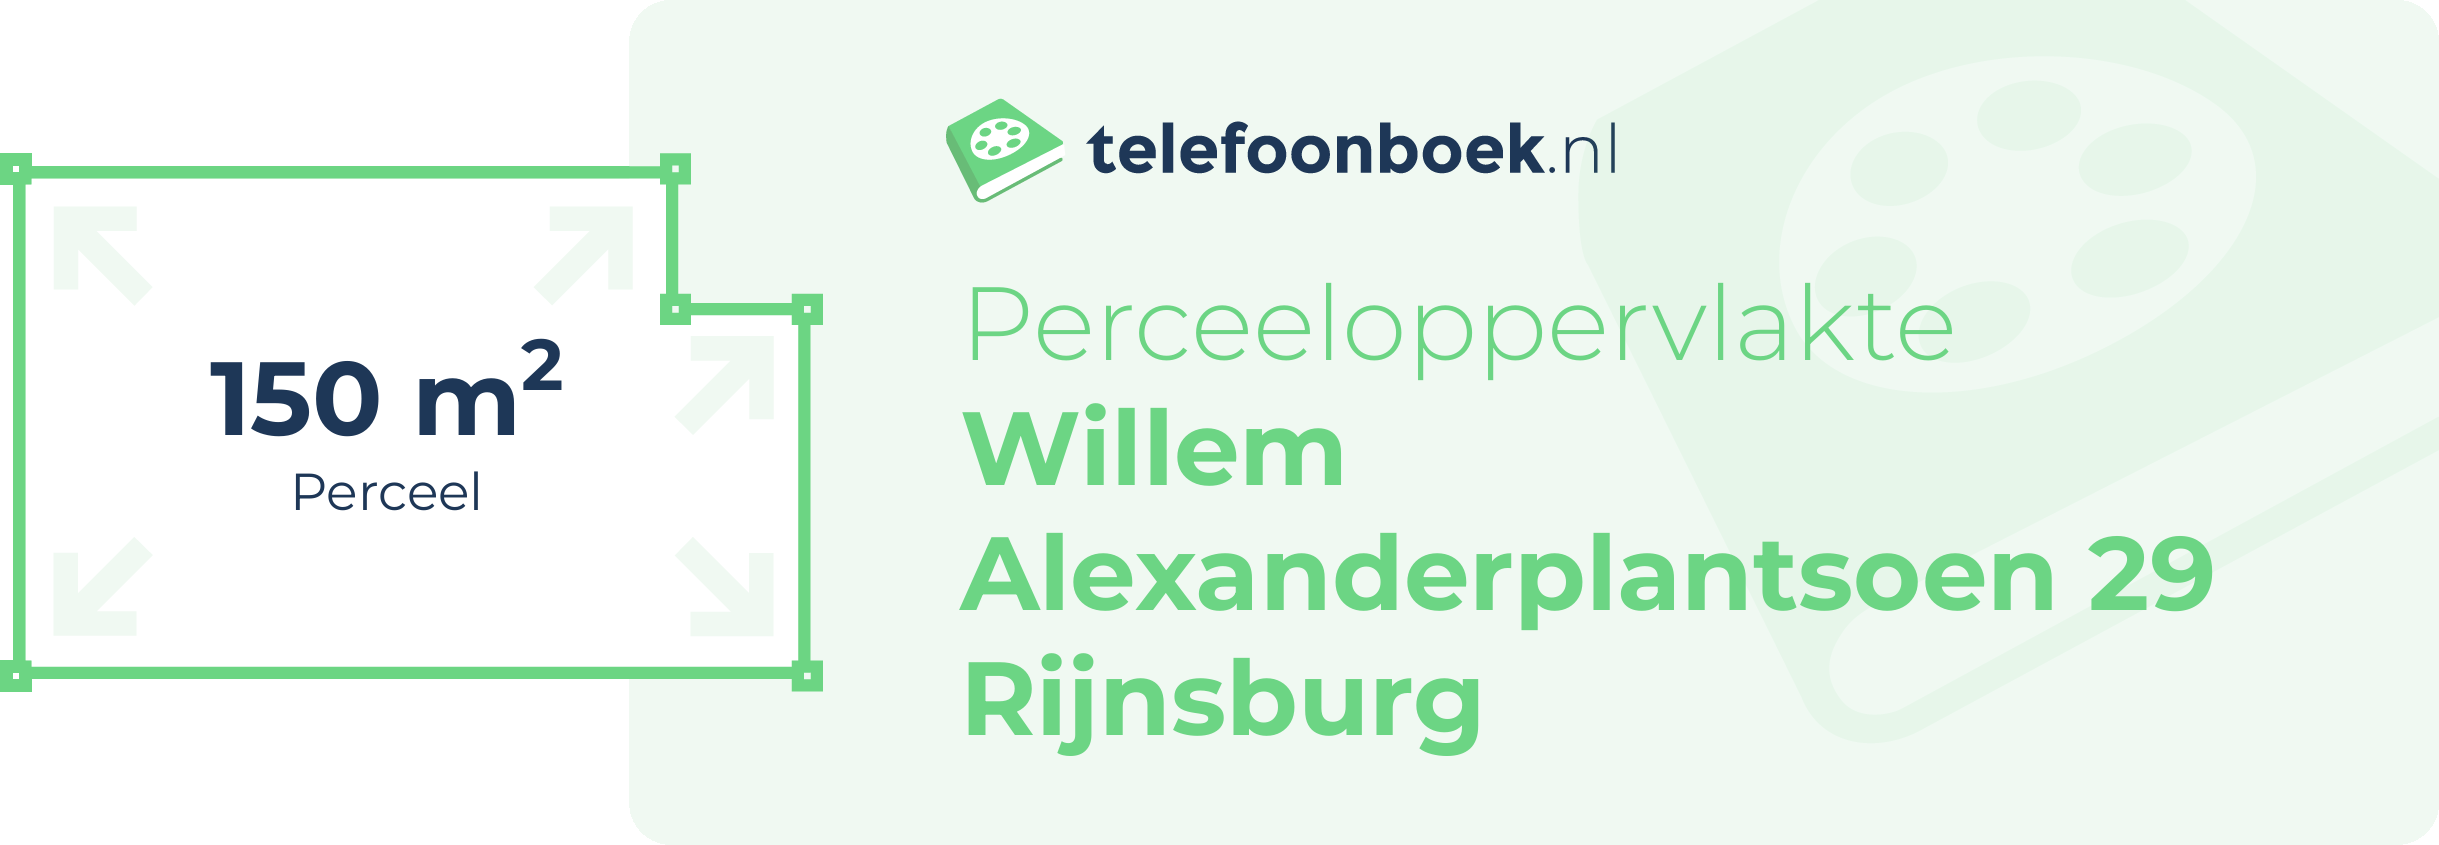 Perceeloppervlakte Willem Alexanderplantsoen 29 Rijnsburg